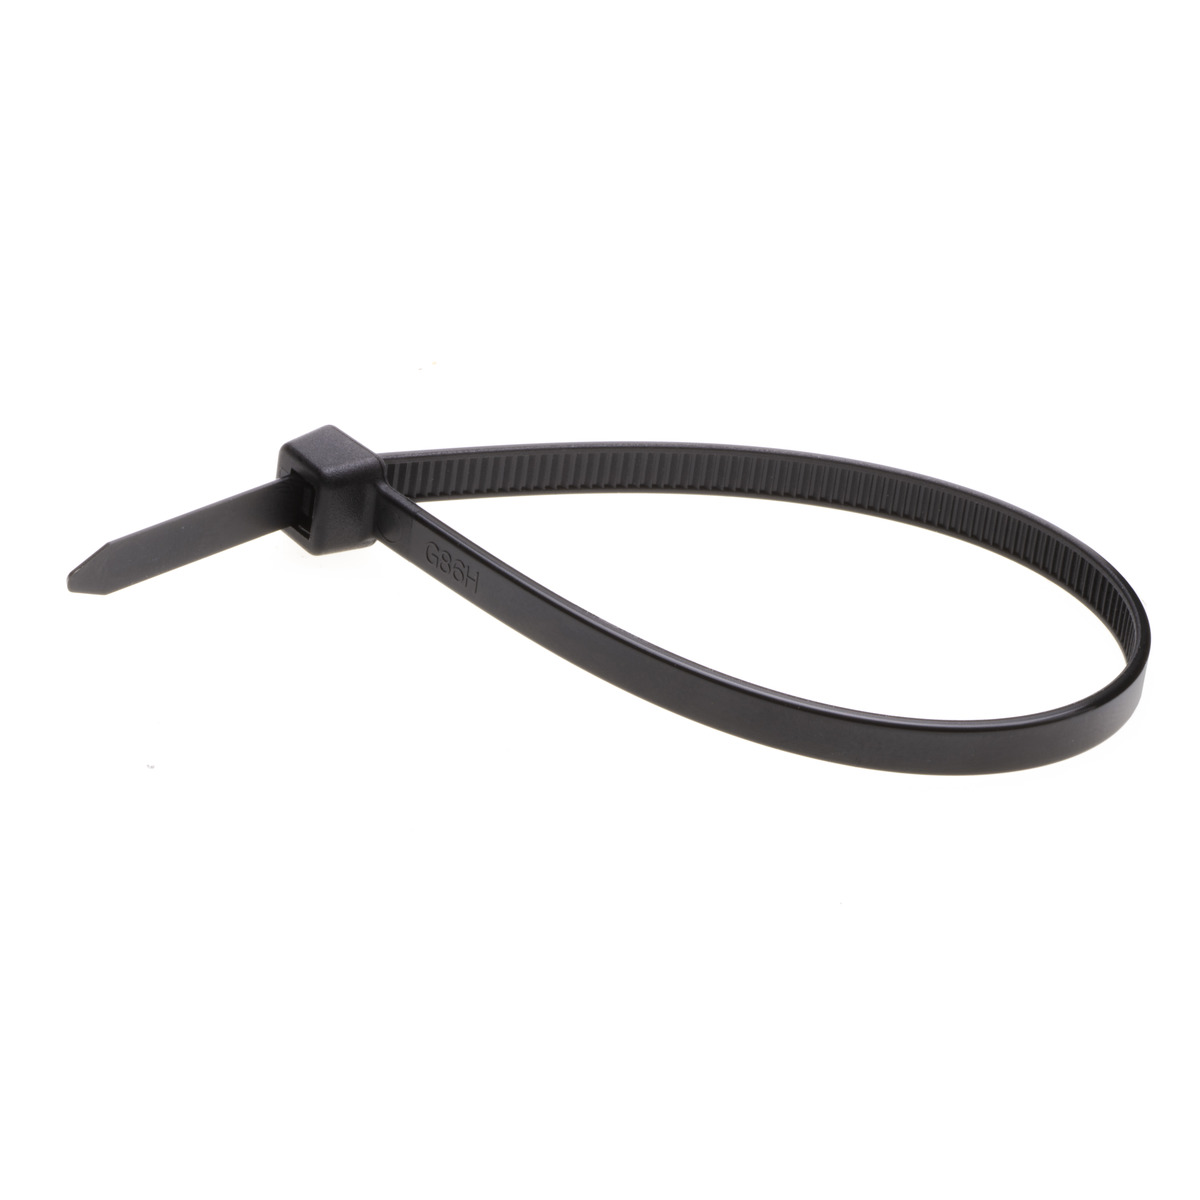 KSS Nylon 66 Black Cable Tie 2.5 x 300 mm (100 Pack) - MODDIY